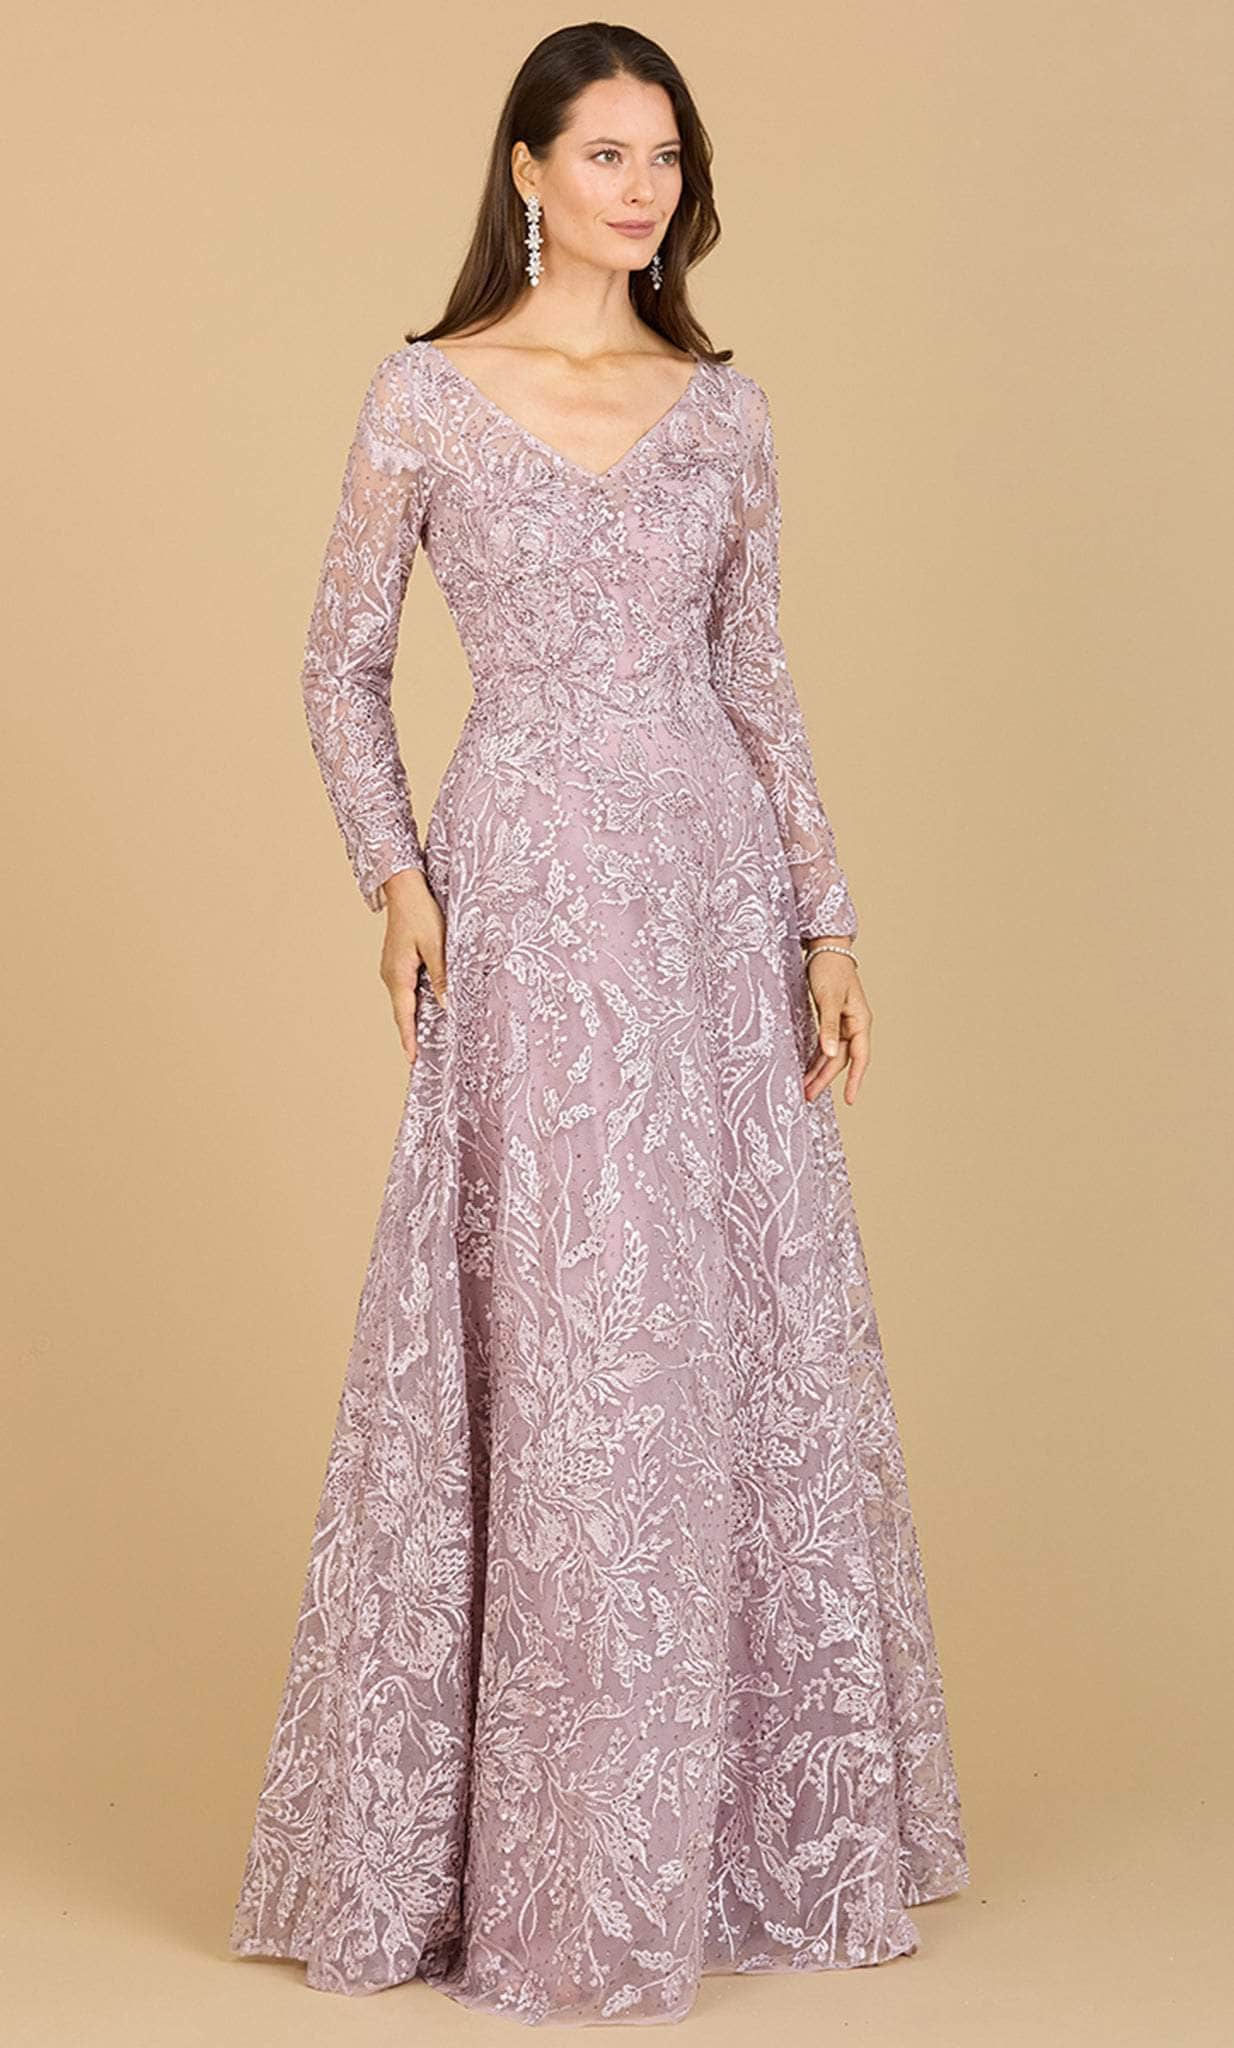 Lara Dresses 29200 - Embroidered A-Line Prom Dress
